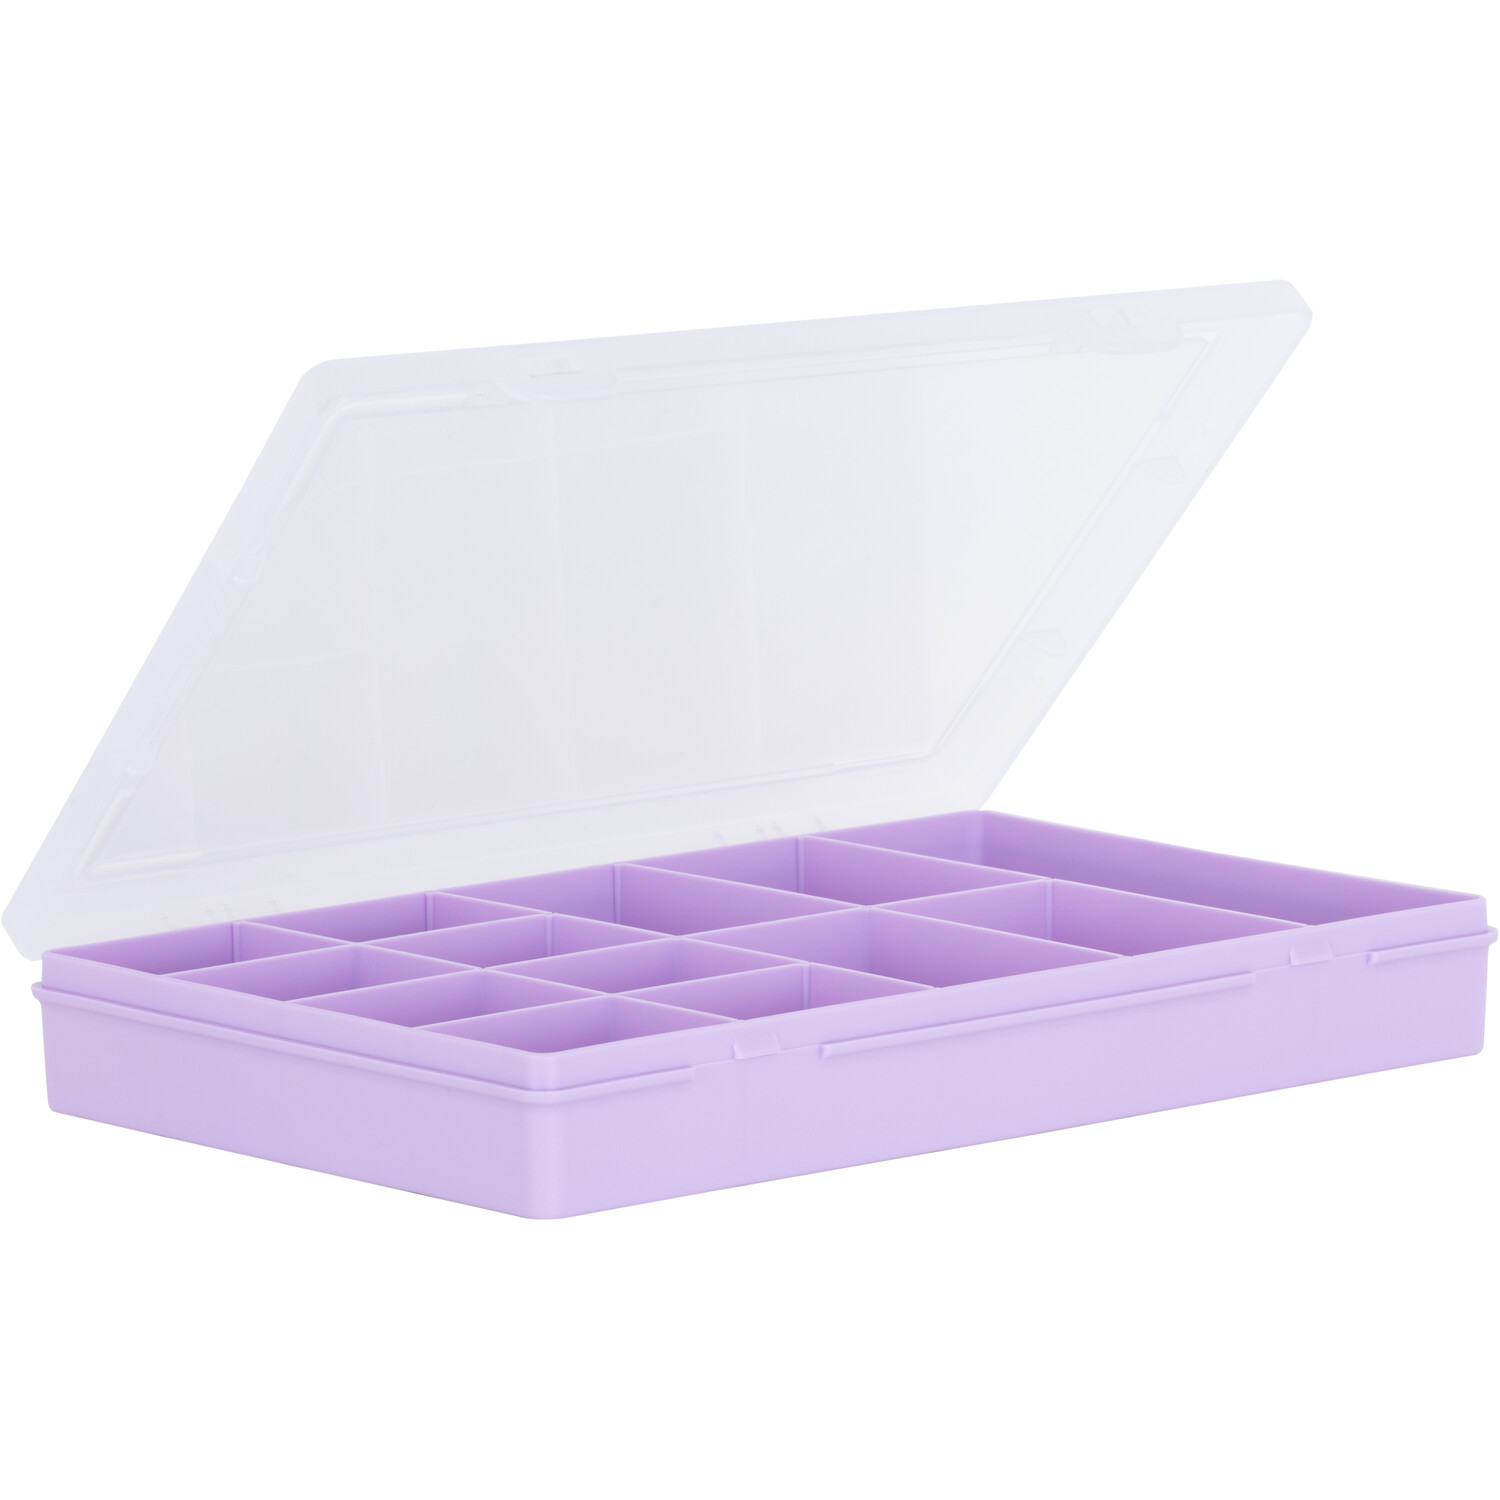 Organiser Box  - Lilac / Small Image 1